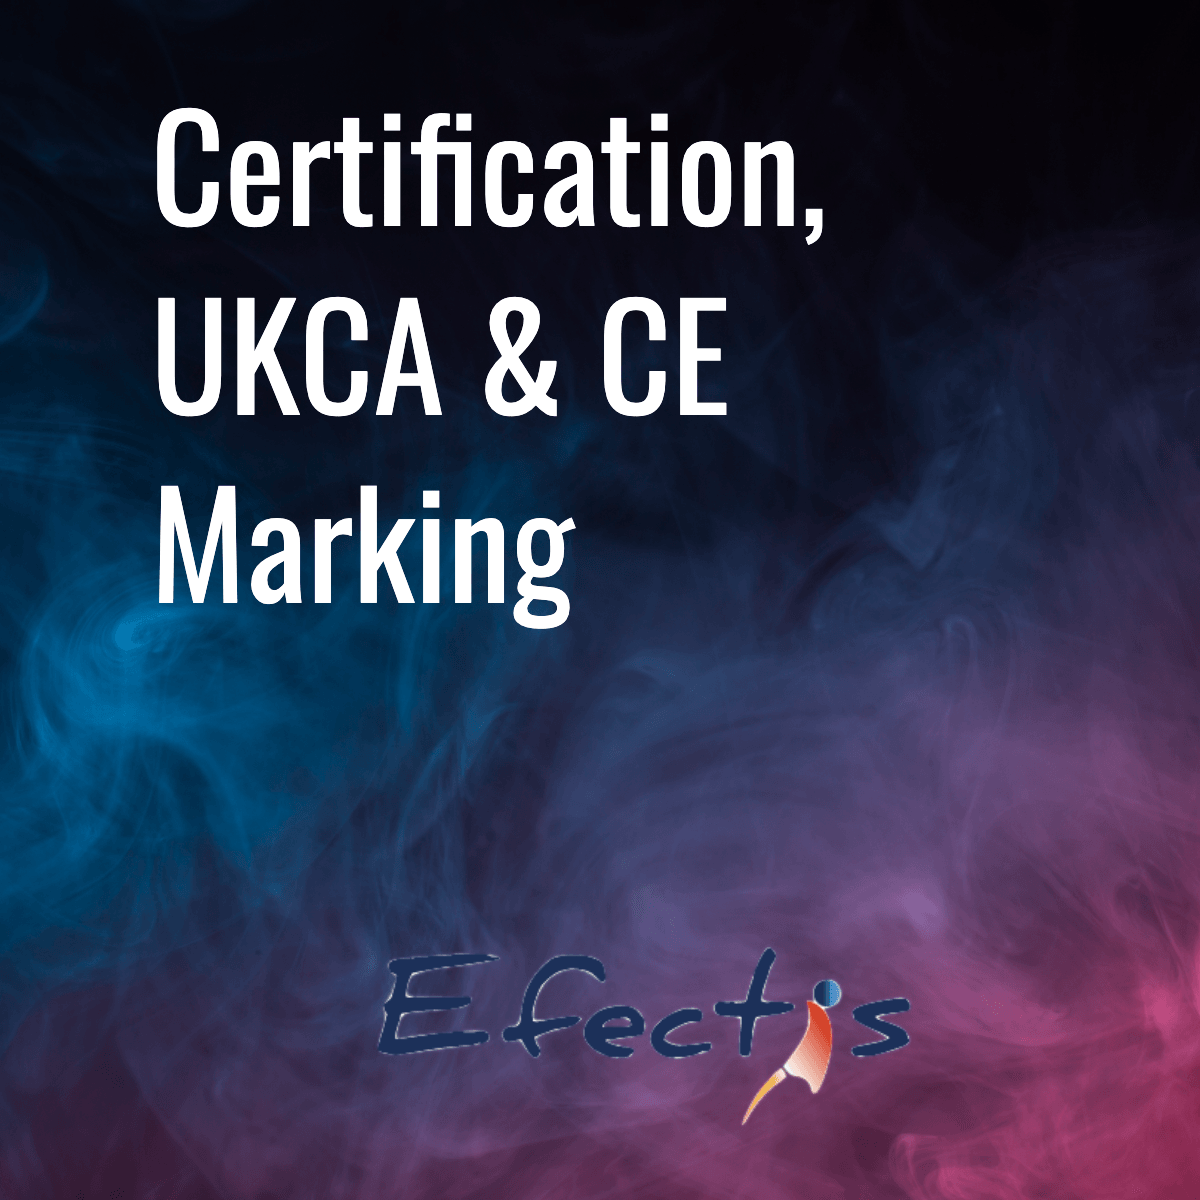 Certification, UKCA & CE Marking